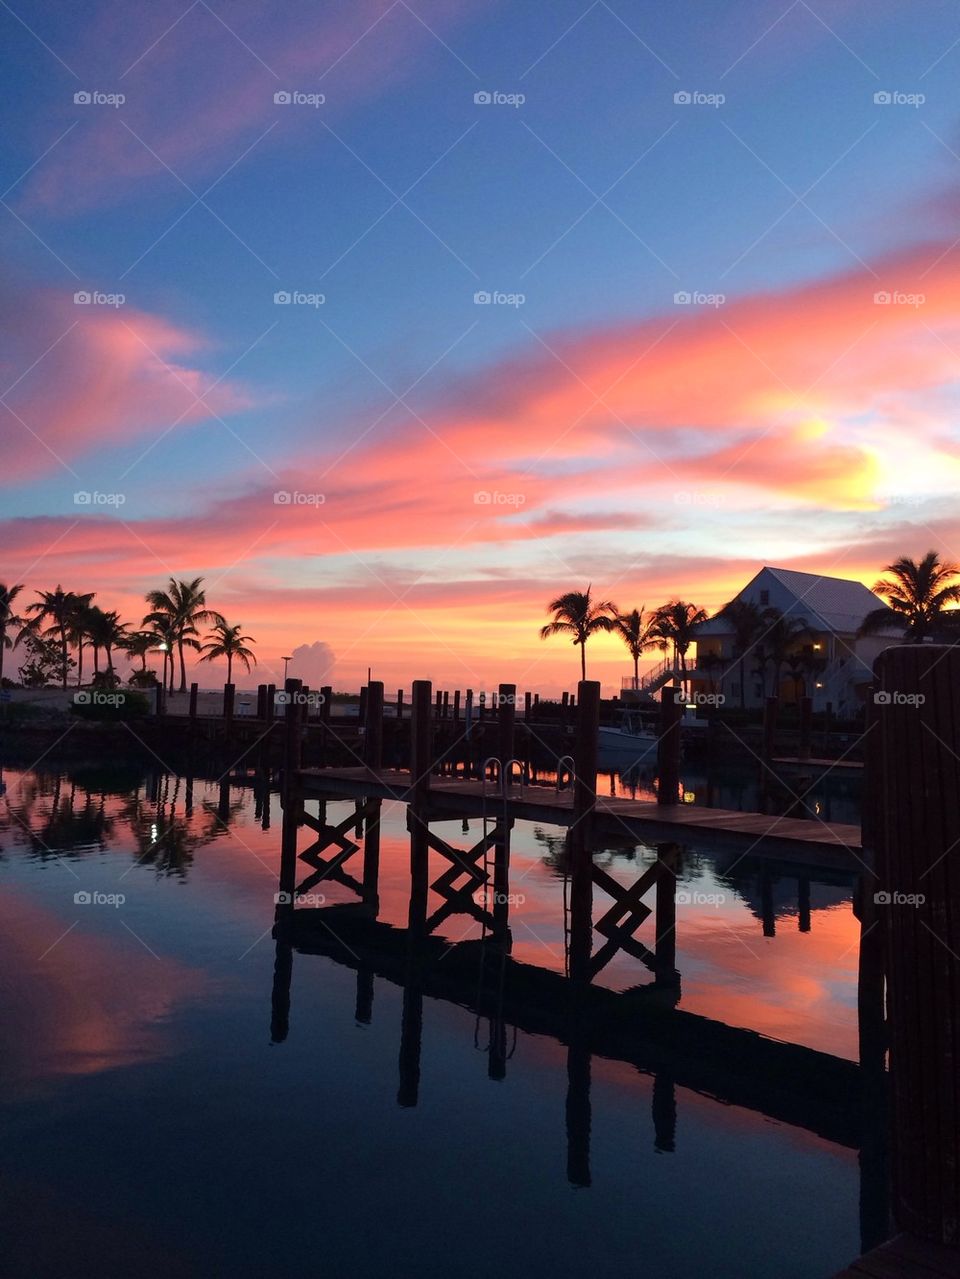 Bahamian sunrise